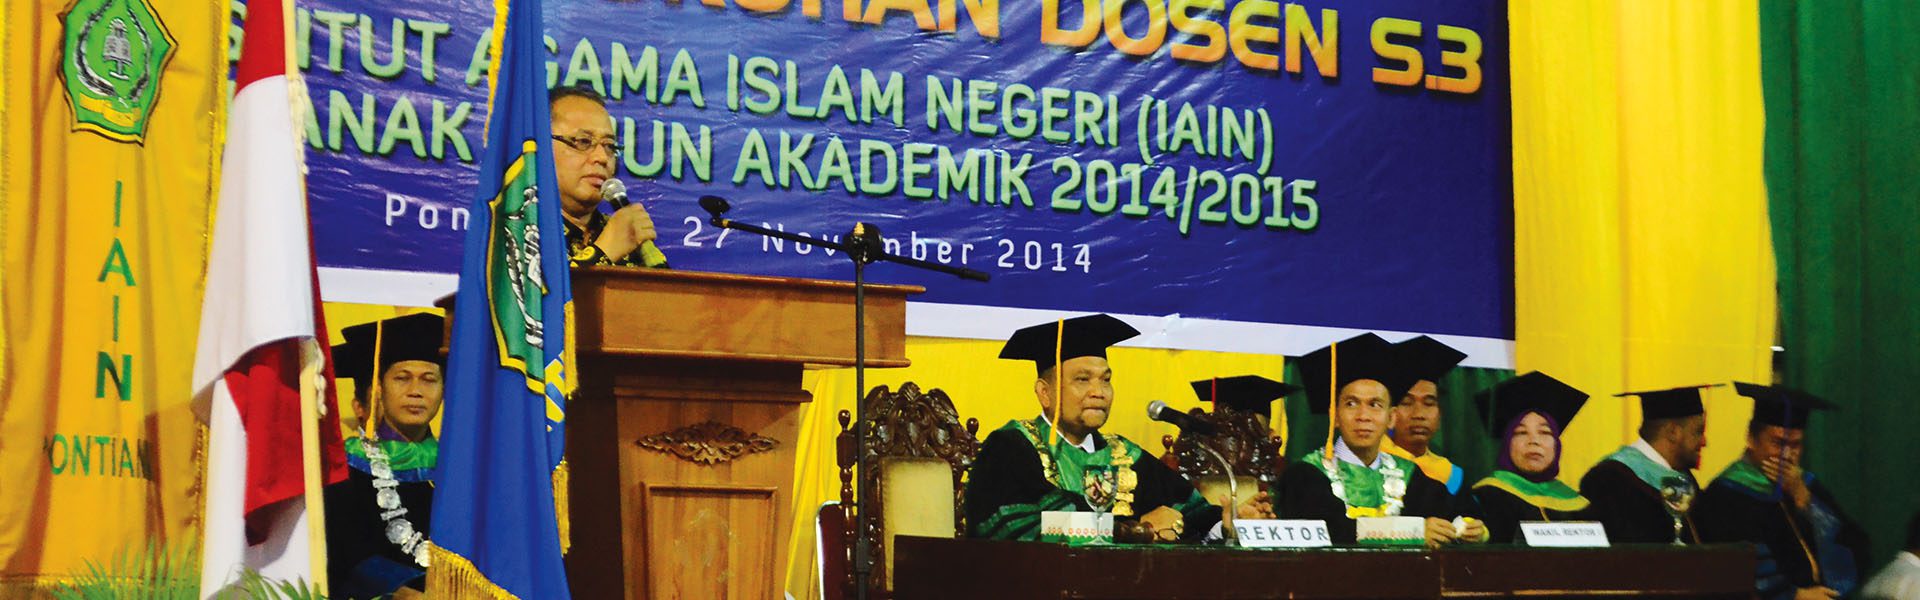 Jadikan Indonesia Kiblat Studi Islam Dunia